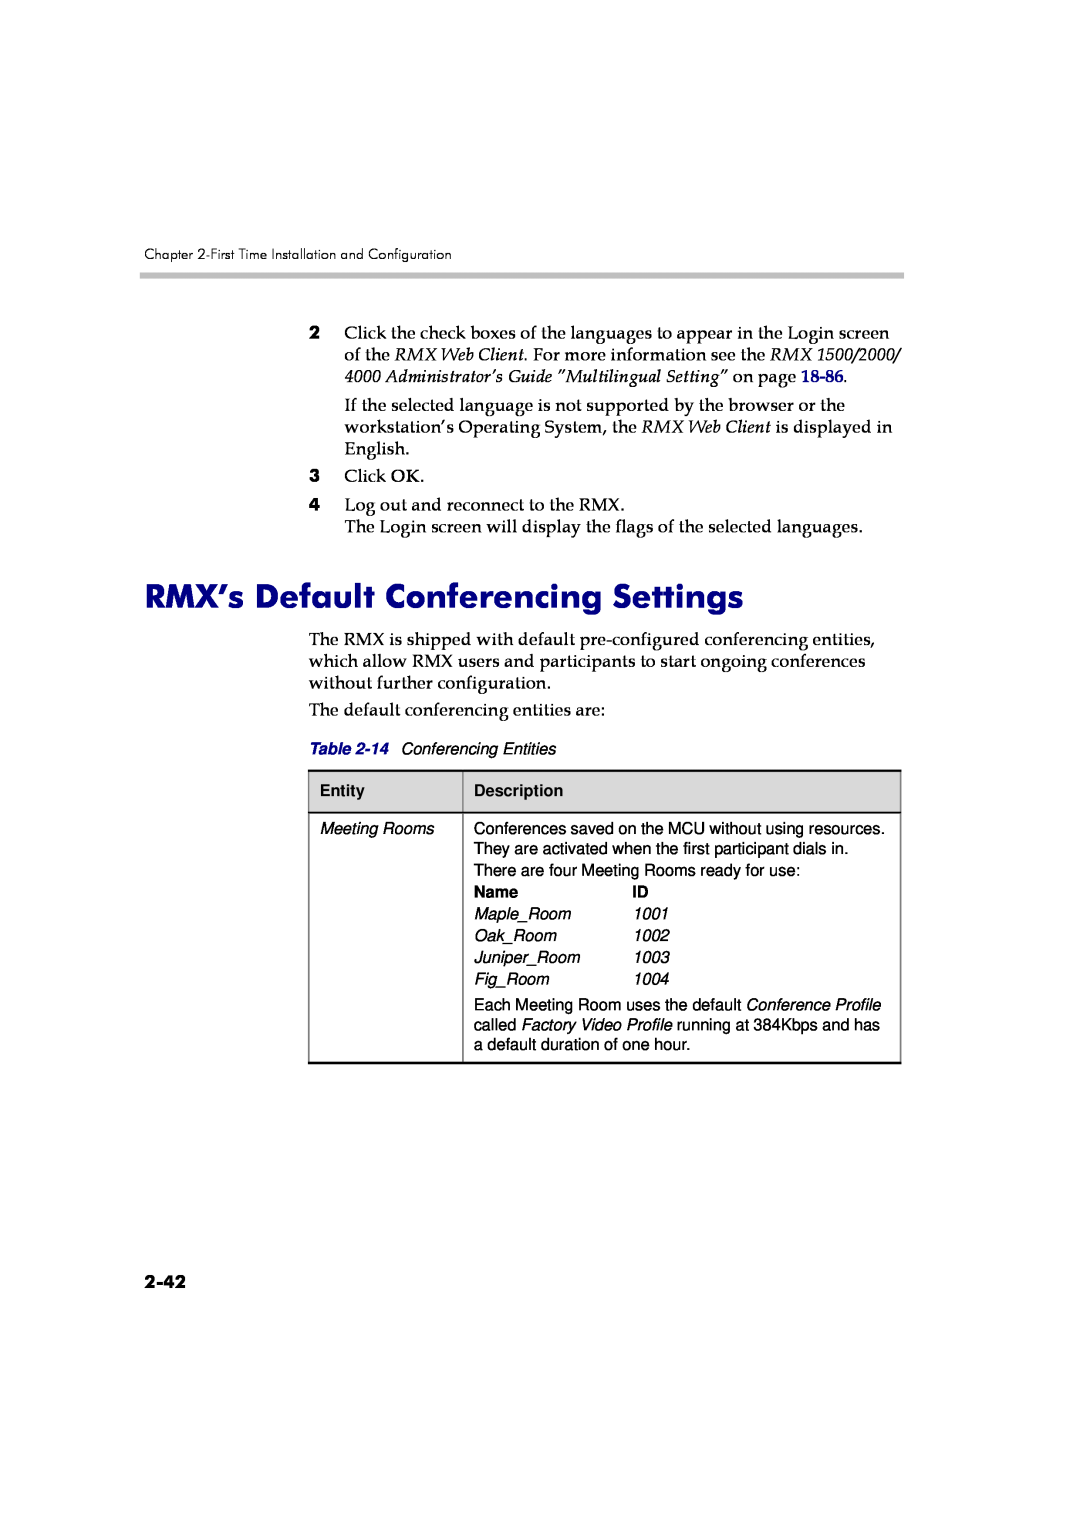 Polycom DOC2560A manual RMX’s Default Conferencing Settings, 2-42 